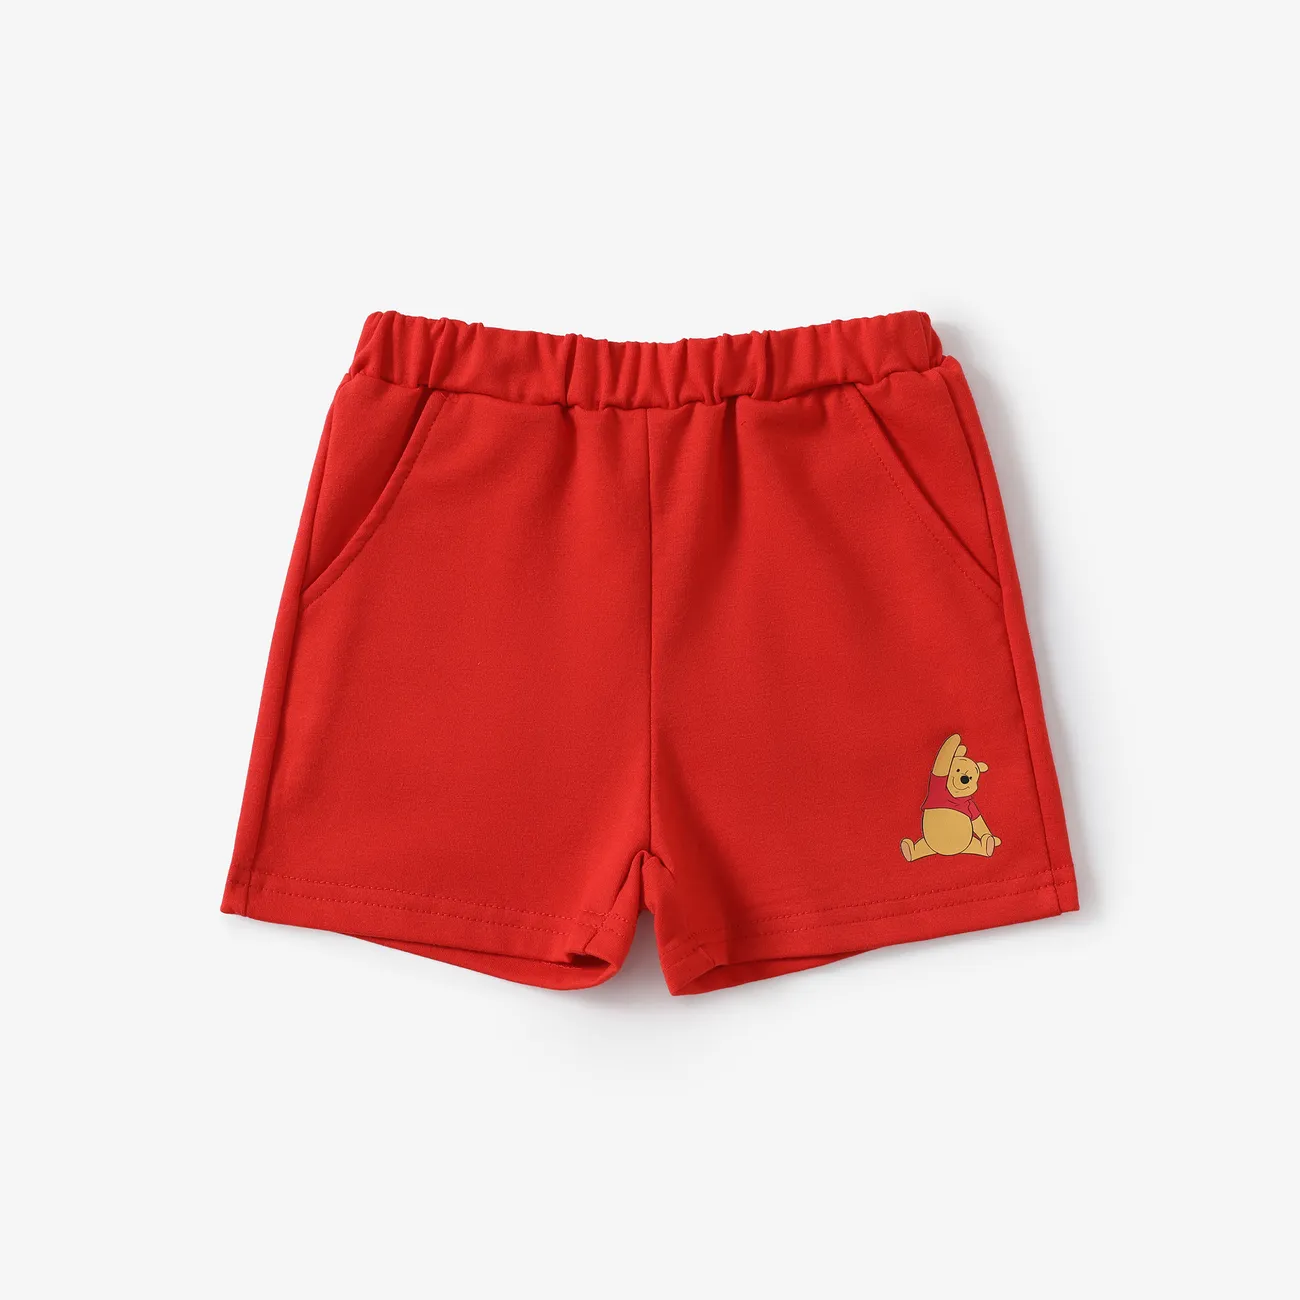 Disney Winnie the Pooh Toddler Boys/Girls 2pcs Naia™ Jumping Winnie Print Tank Top with Shorts Set Red big image 1